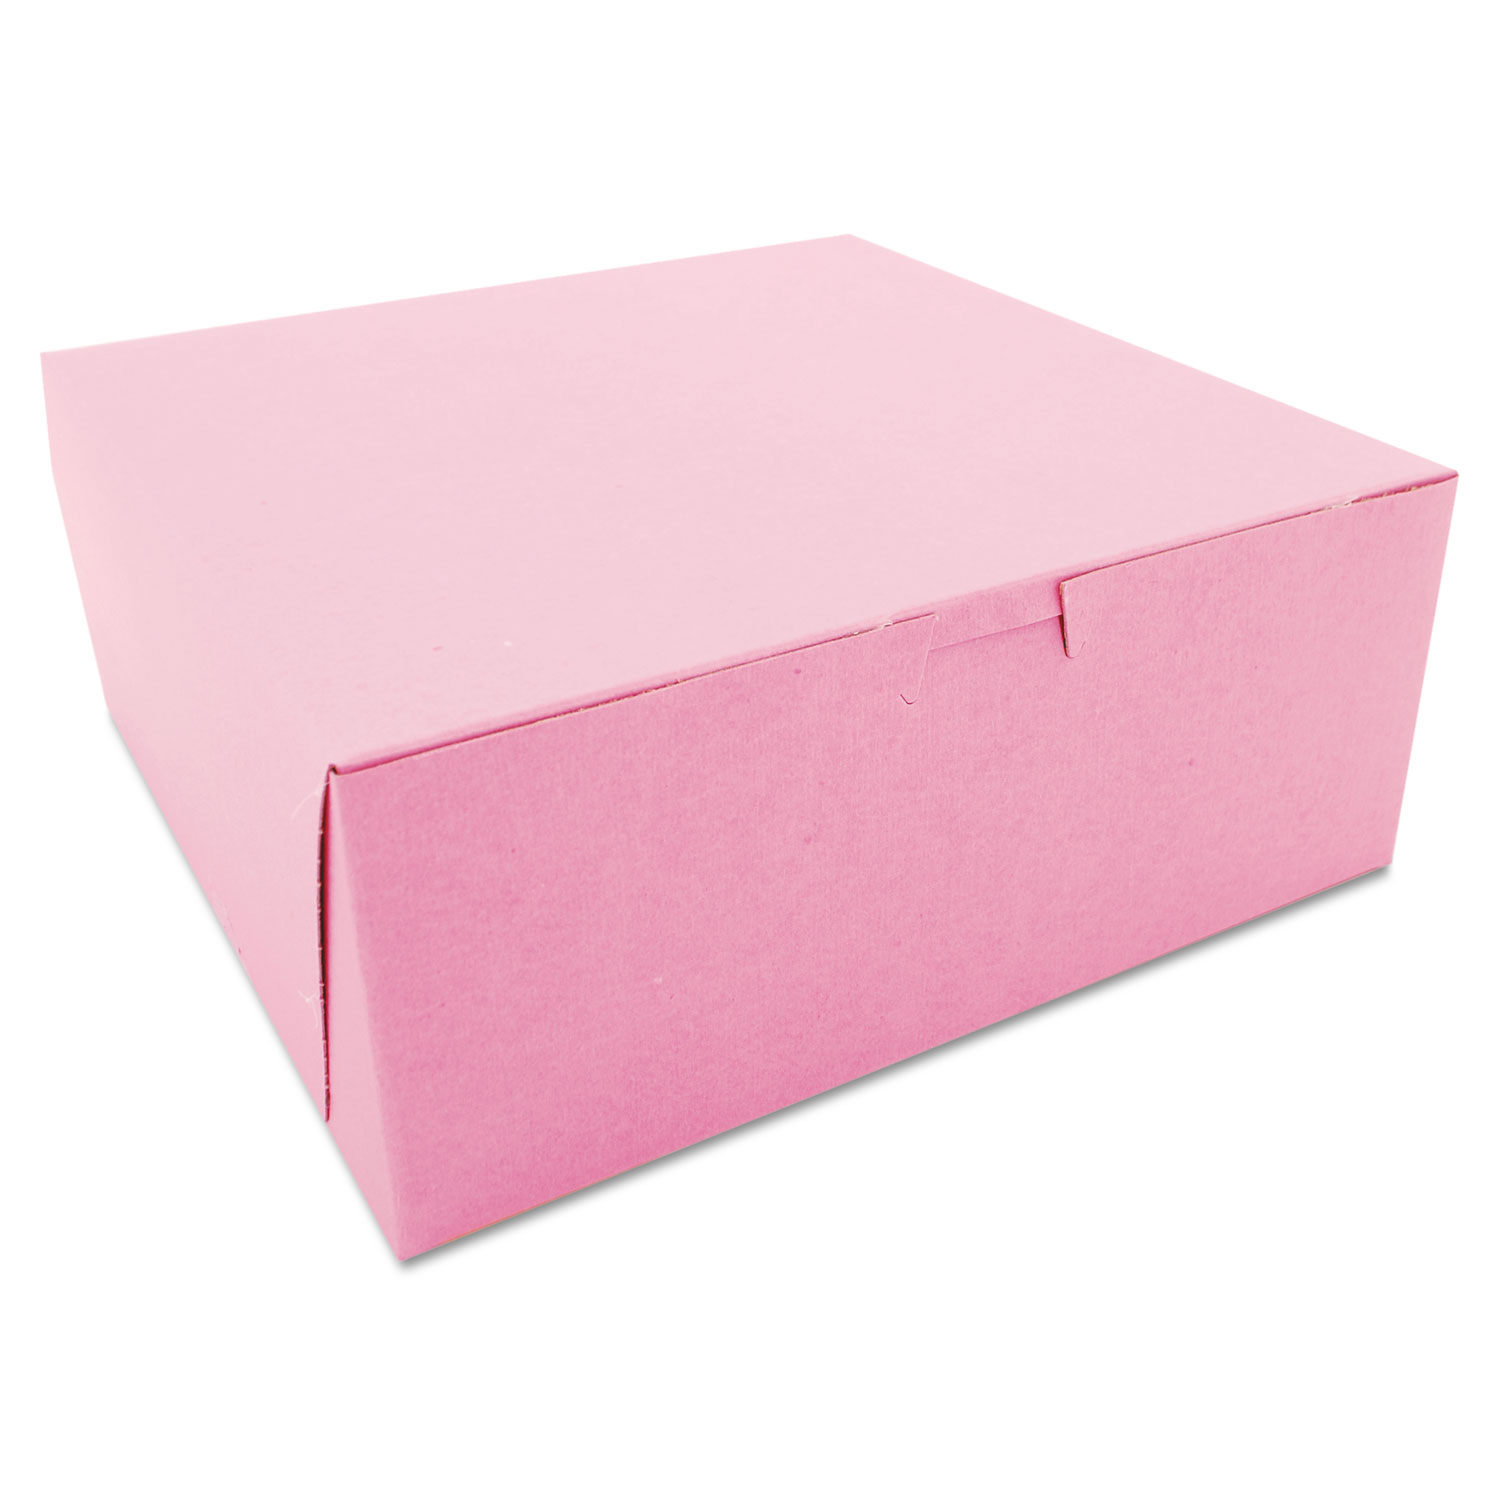  SCT SCH 0873 Non-Window Bakery Boxes, 10 x 10 x 4, Pink, 100/Carton (SCH0873) 